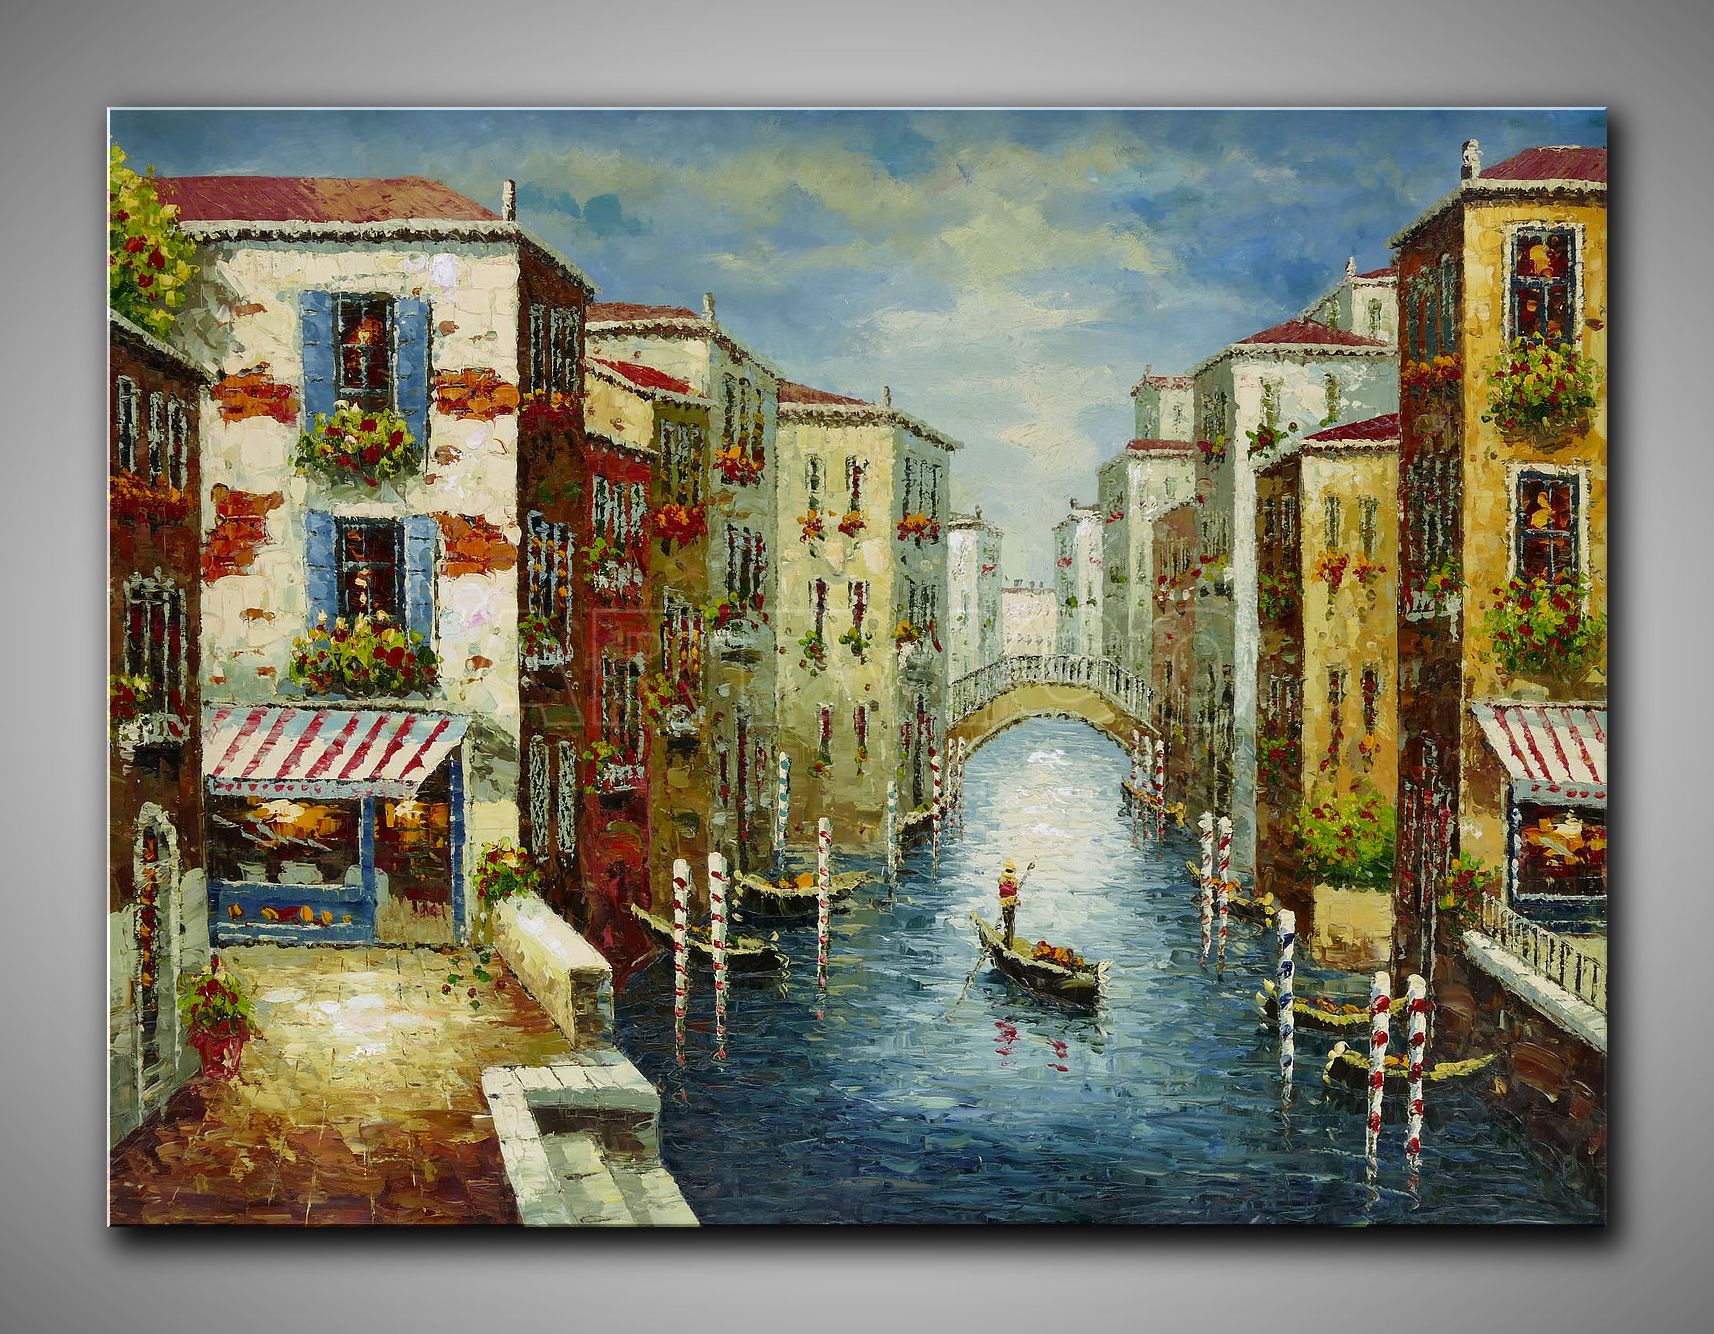 Alter Kanal in Venedig - Galerie, Gemälde Bilderrahmen Kunsthandlung | Poster